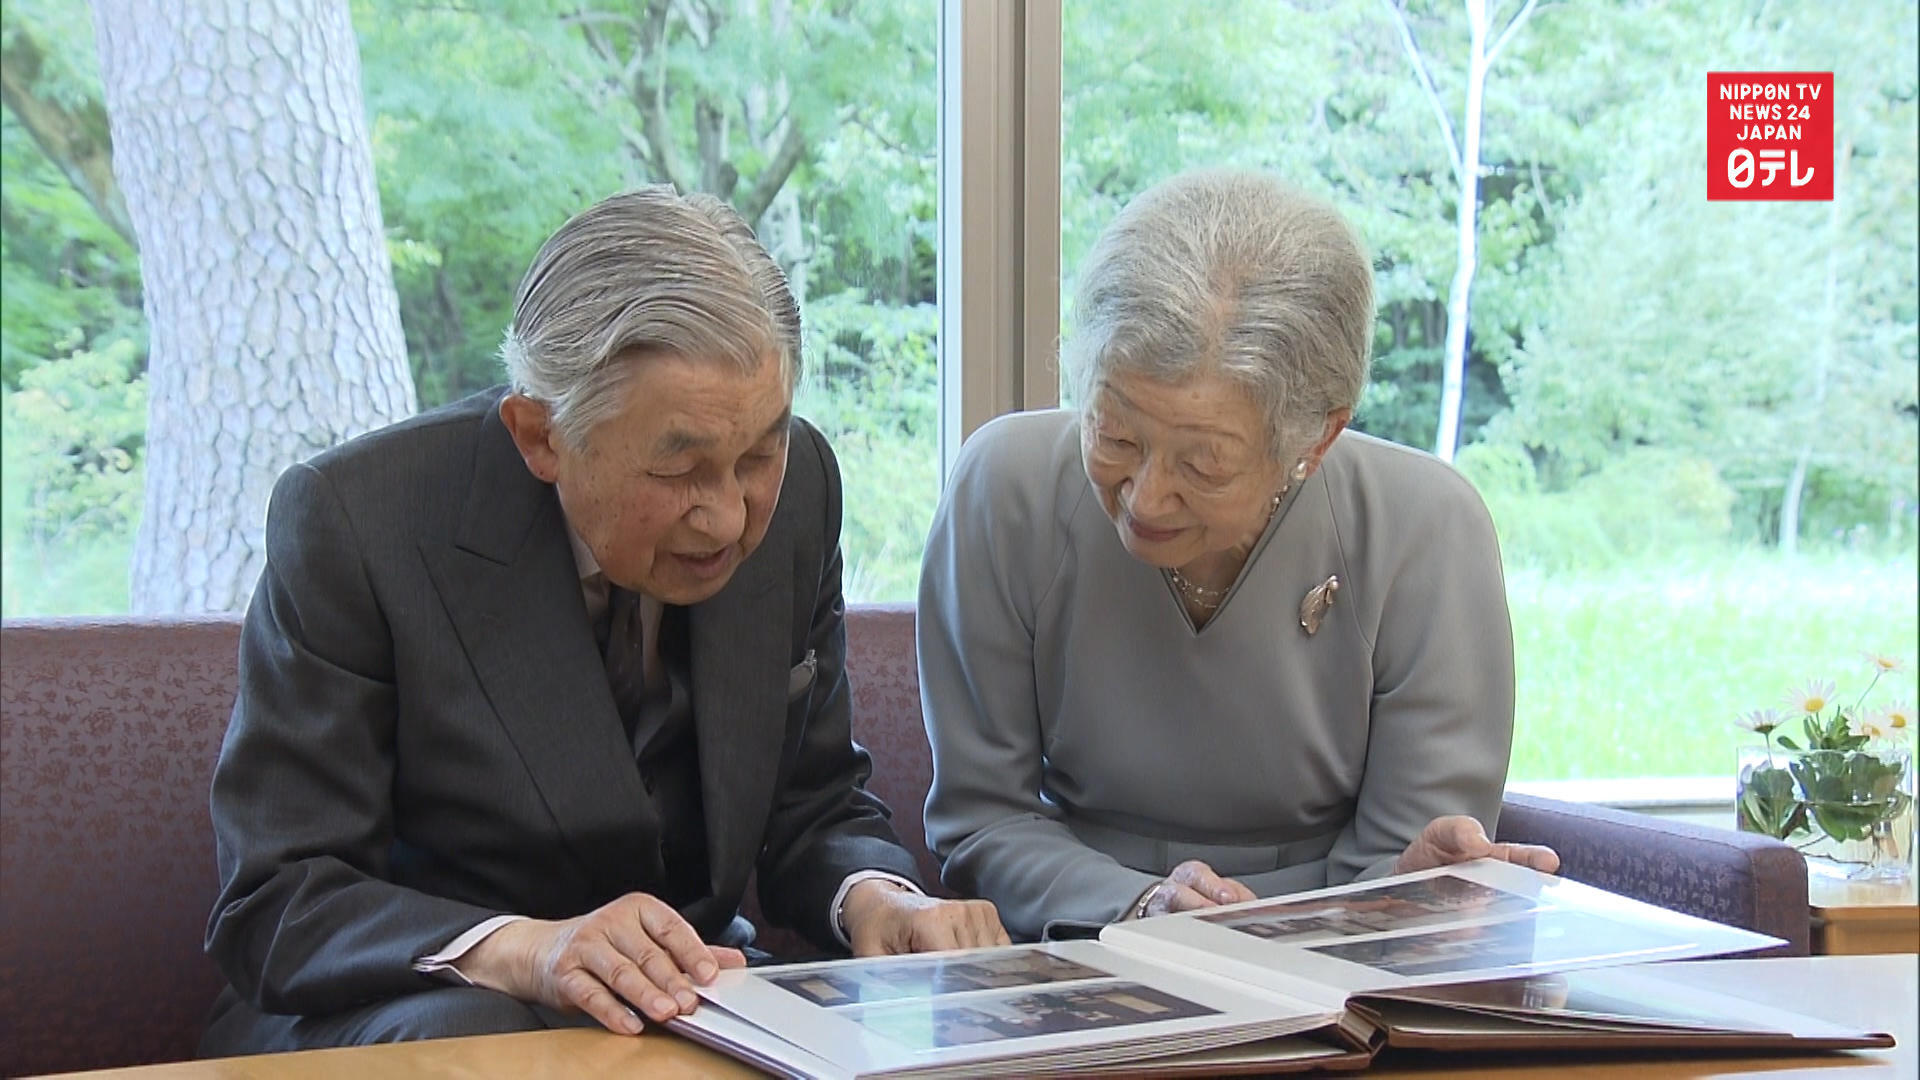 Empress Emerita Michiko turns 85